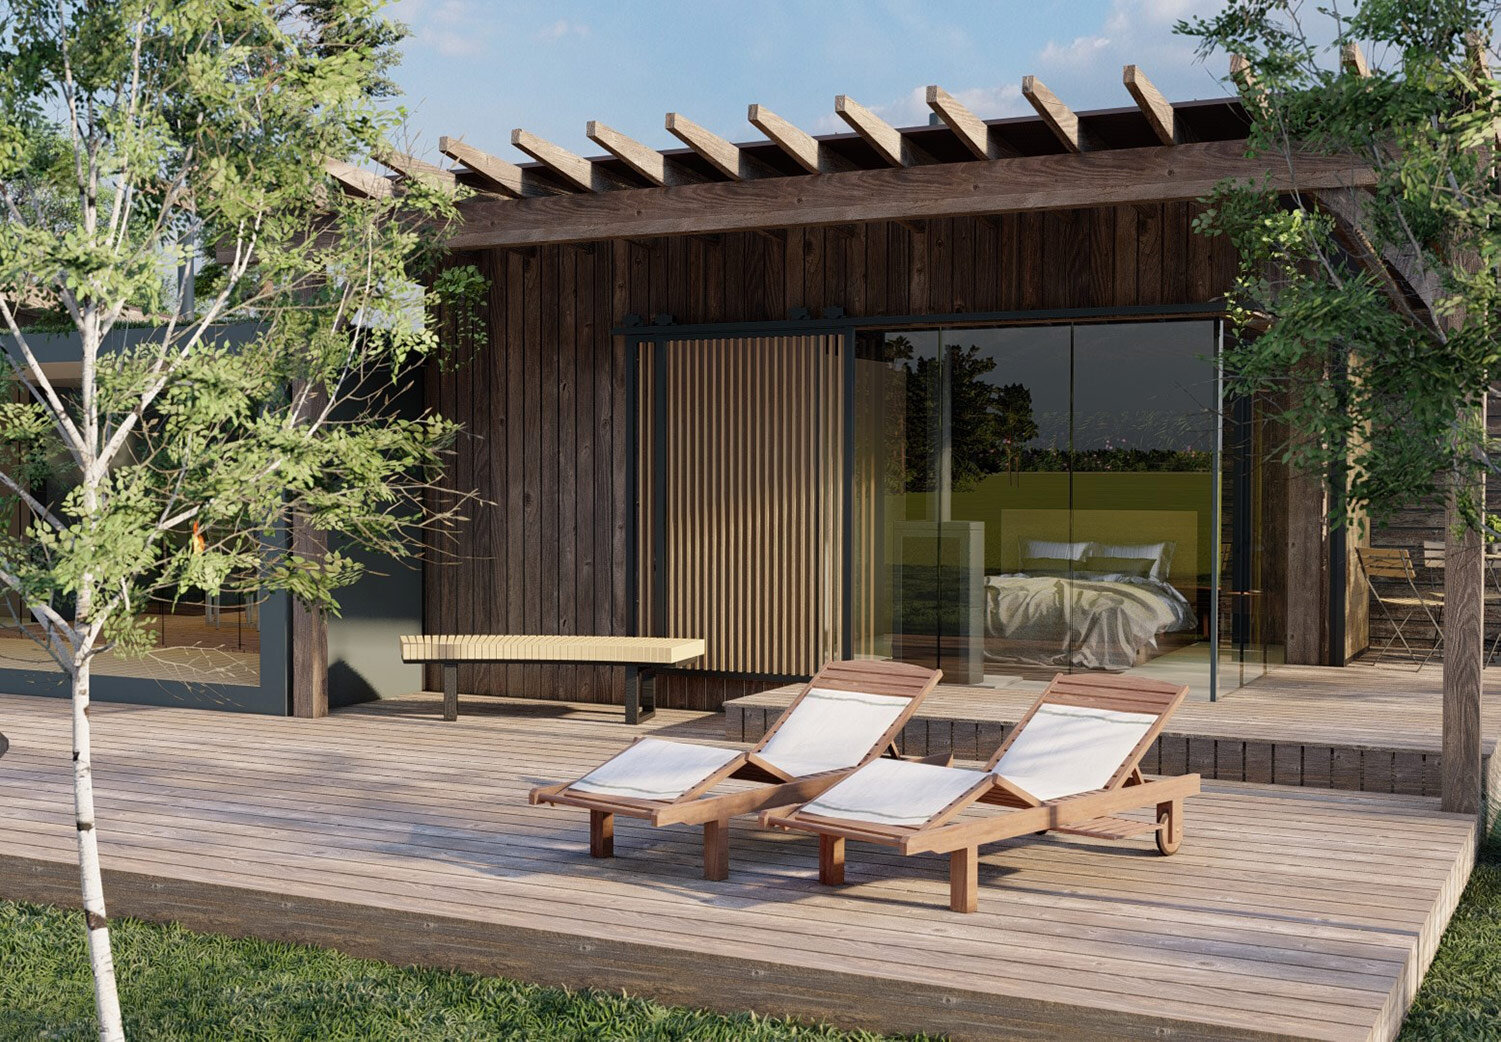 Beautiful bespoke timber annexe for accommodation designed by HUTI